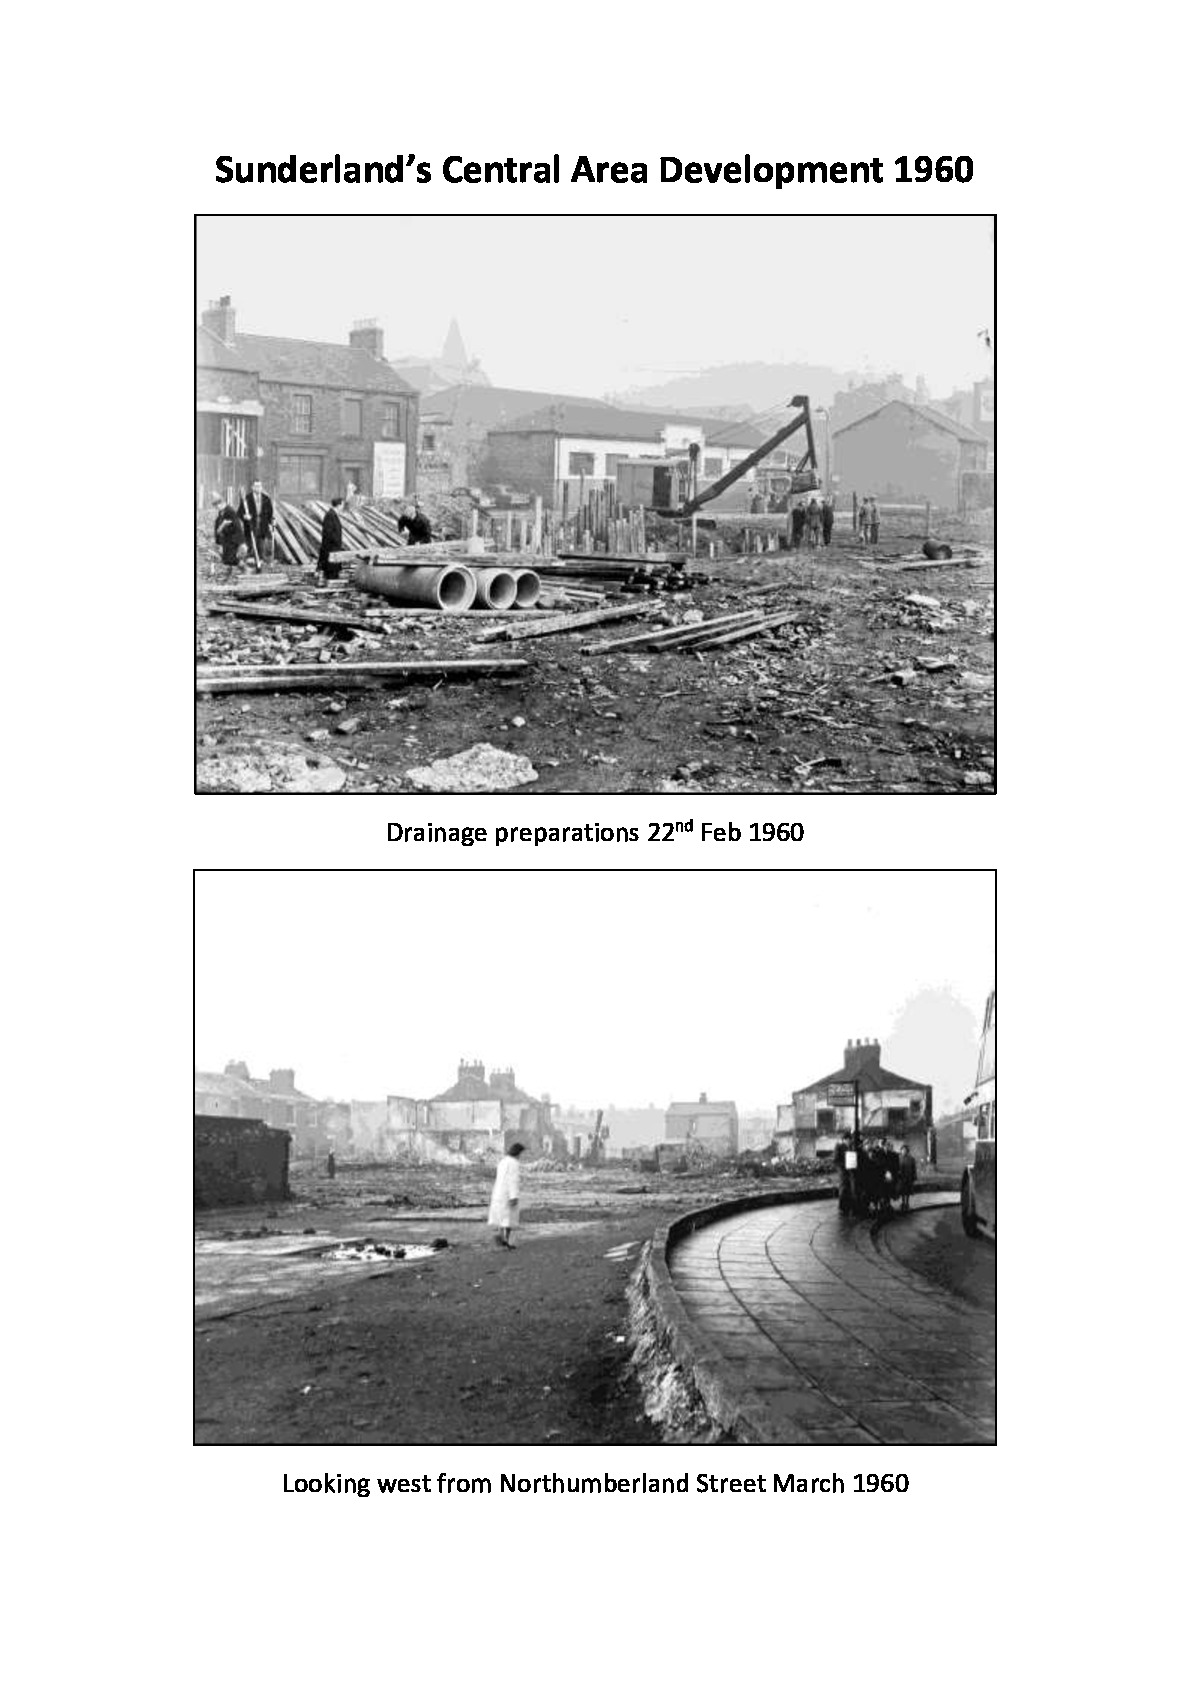 Sunderland' Central Area Development 1960